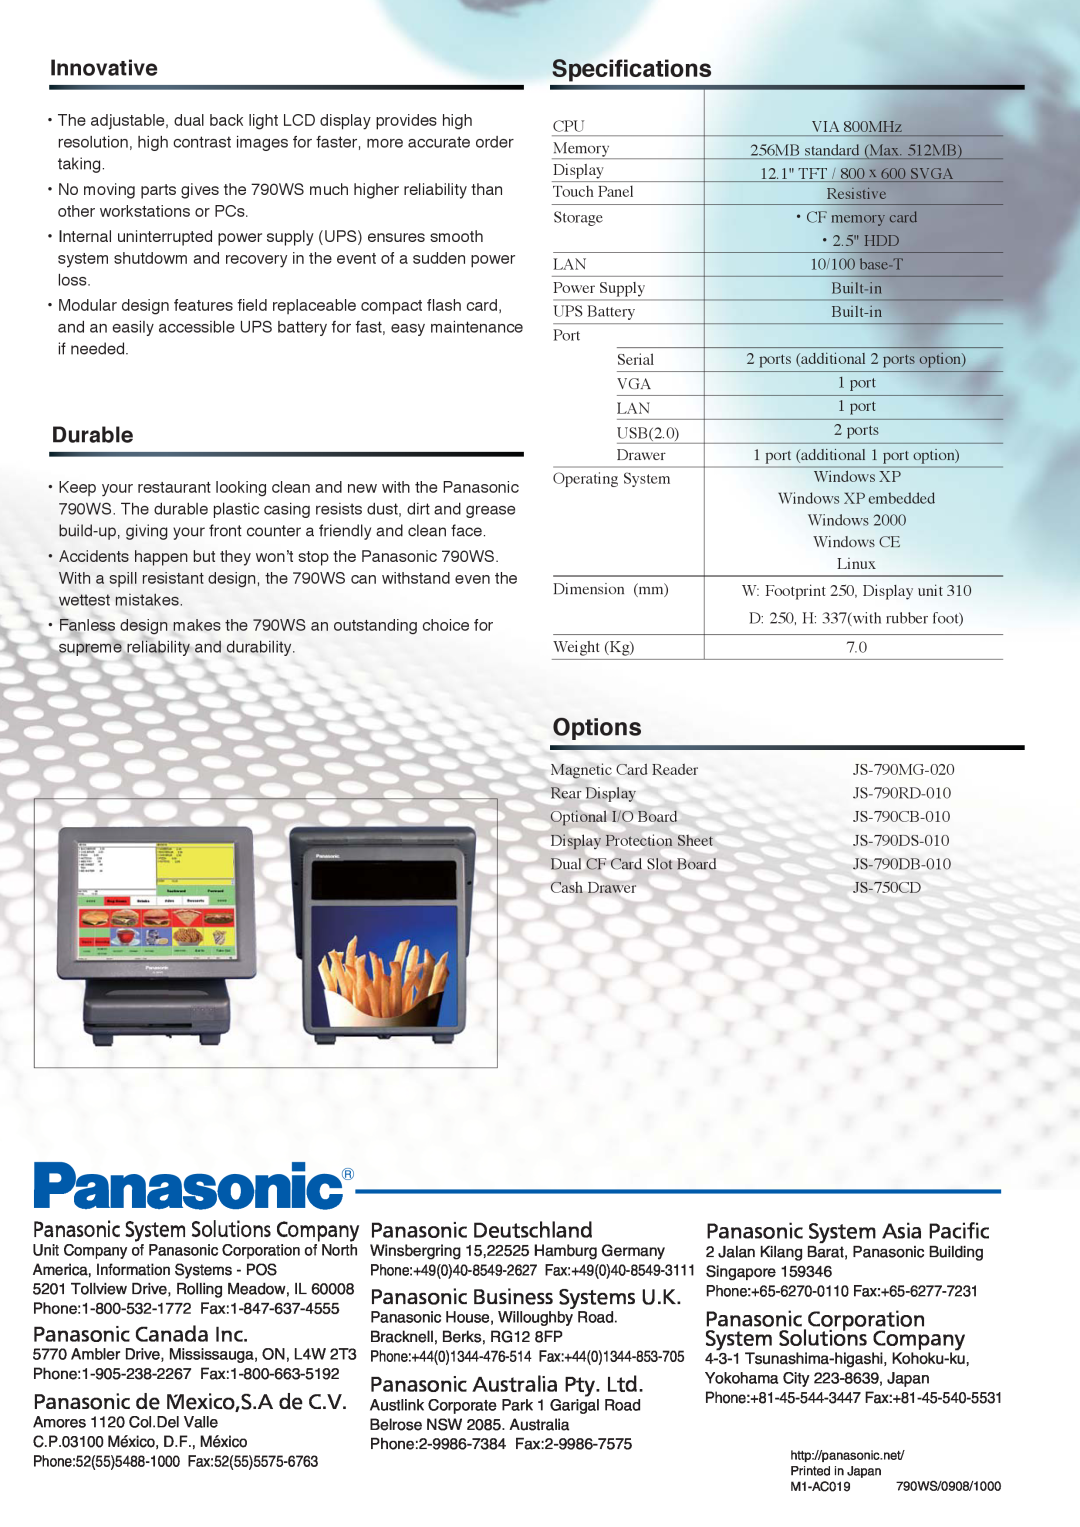 Panasonic JS-790WS manual Specifications, Options, Innovative, Durable, 3DQDVRQLFHXWVFKODQG, 3DQDVRQLF6\VWHP$VLD3DFLILF 